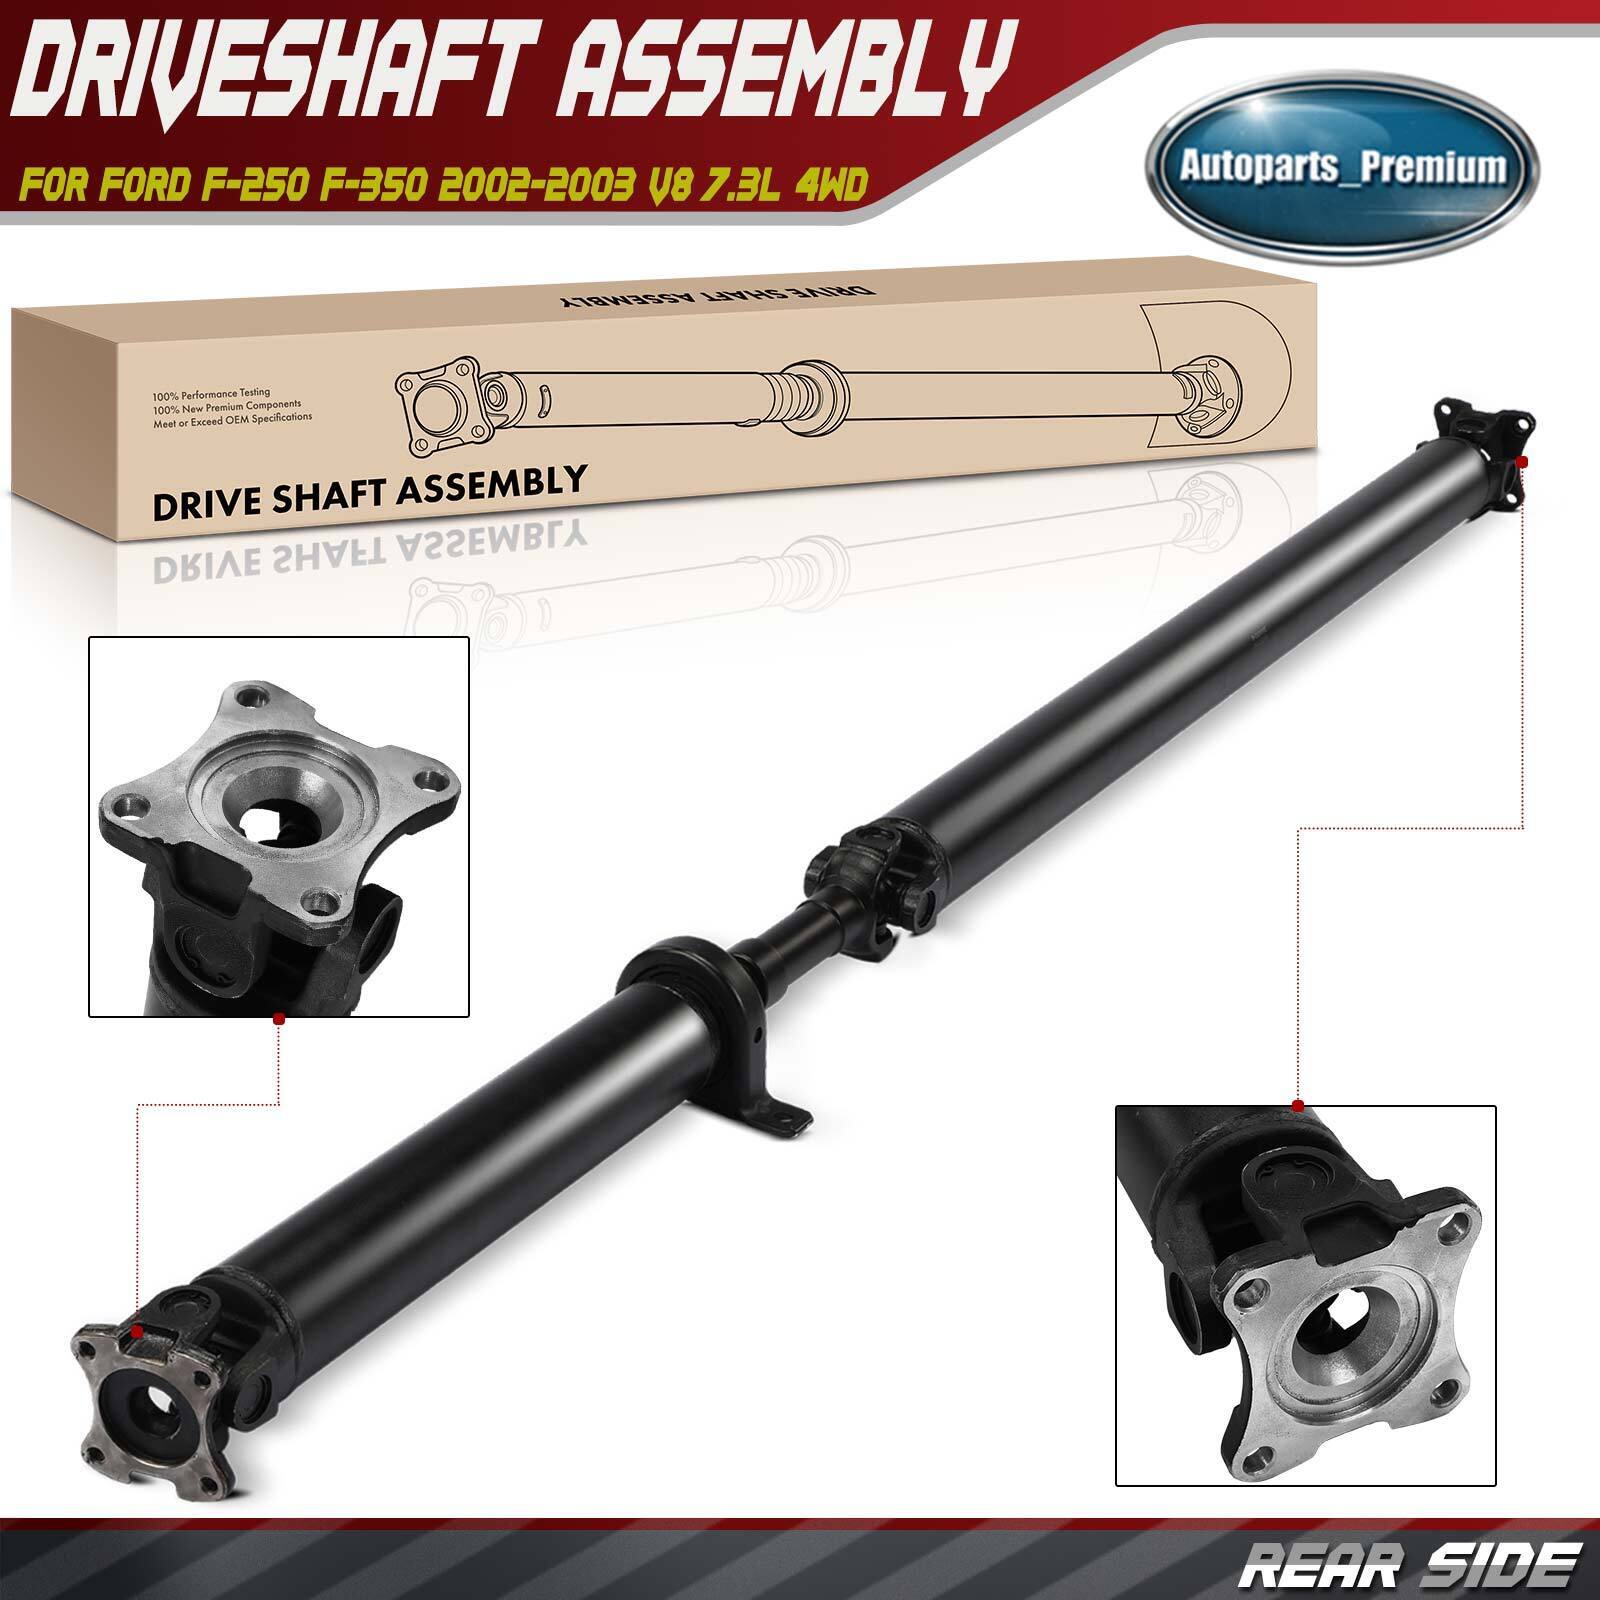 Rear Driveshaft Prop Shaft Assembly for Ford F-250 F-350 2002-2003 V8 7.3L 4WD